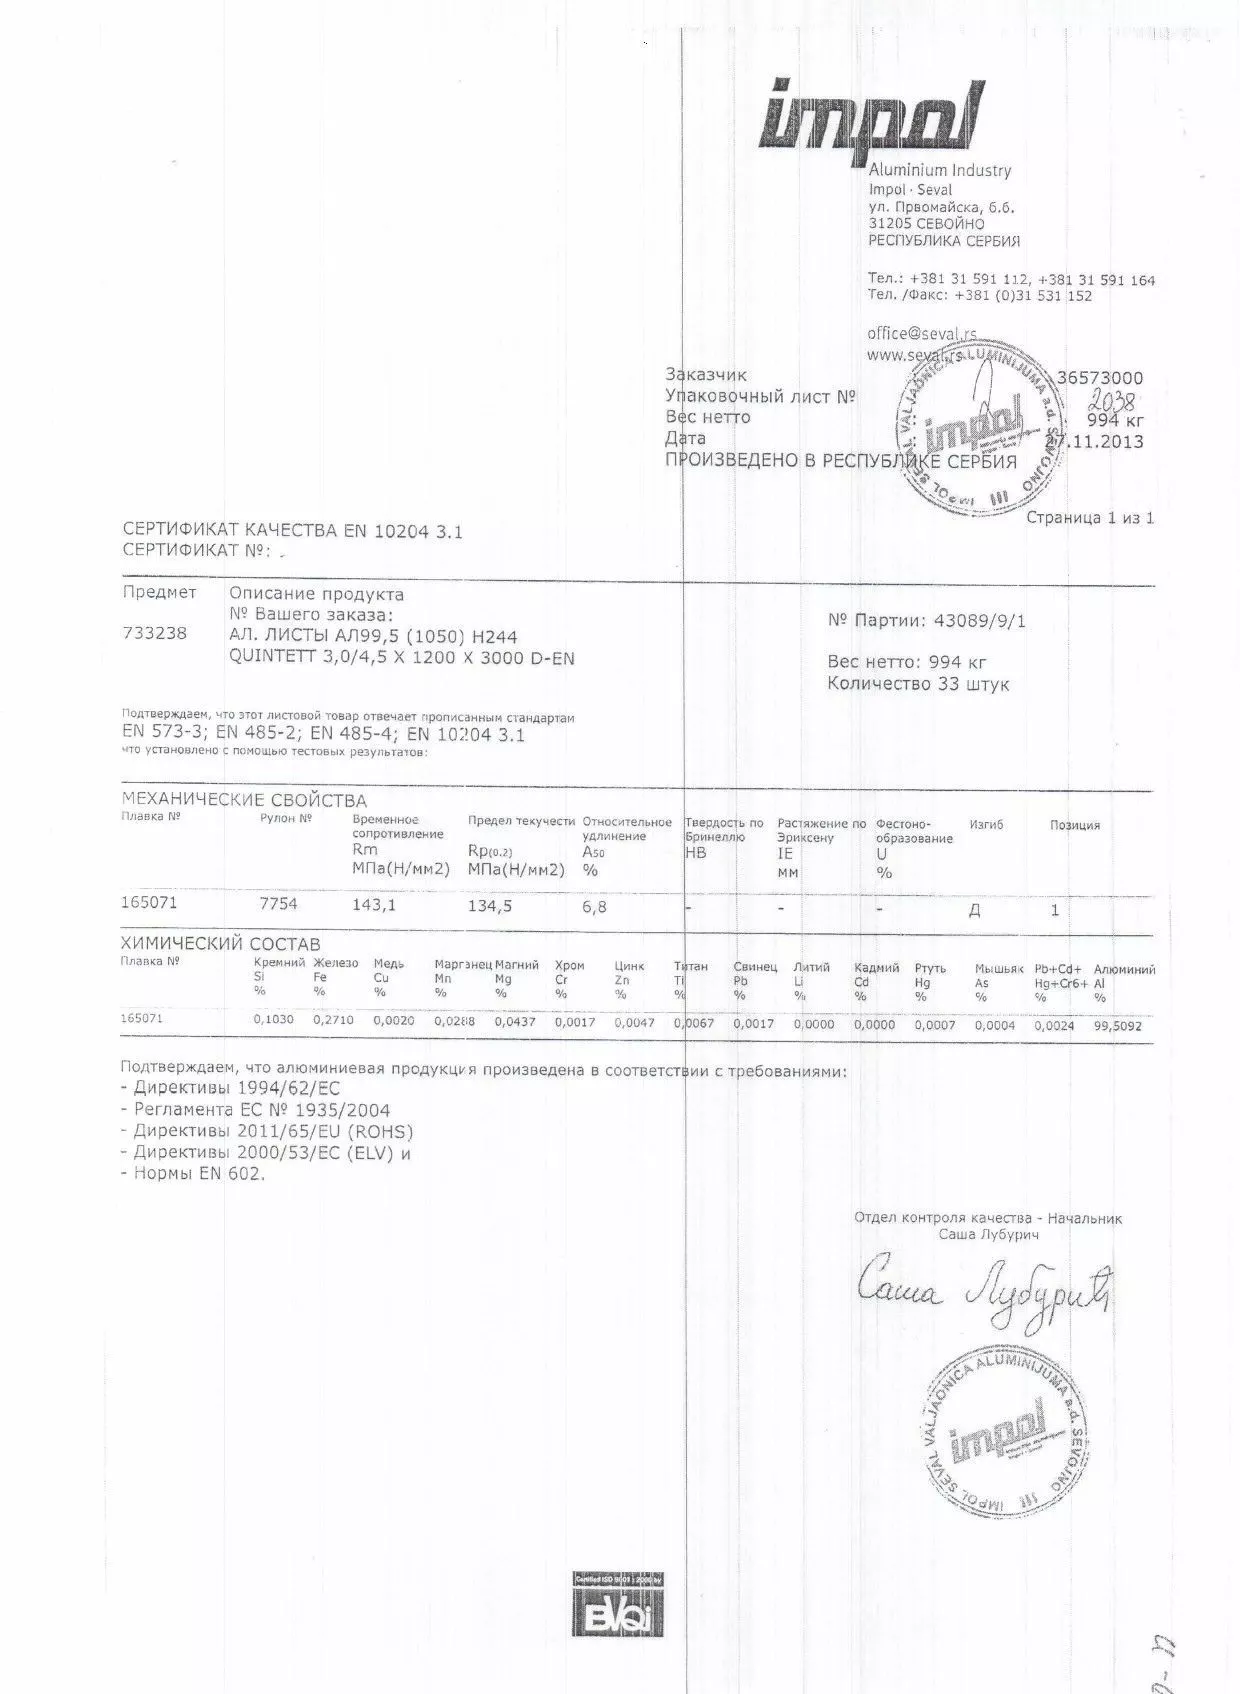 Сертификат на лист алюминиевый рифленый 3х1200х3000 1050 Н244 квинтет от 27-11